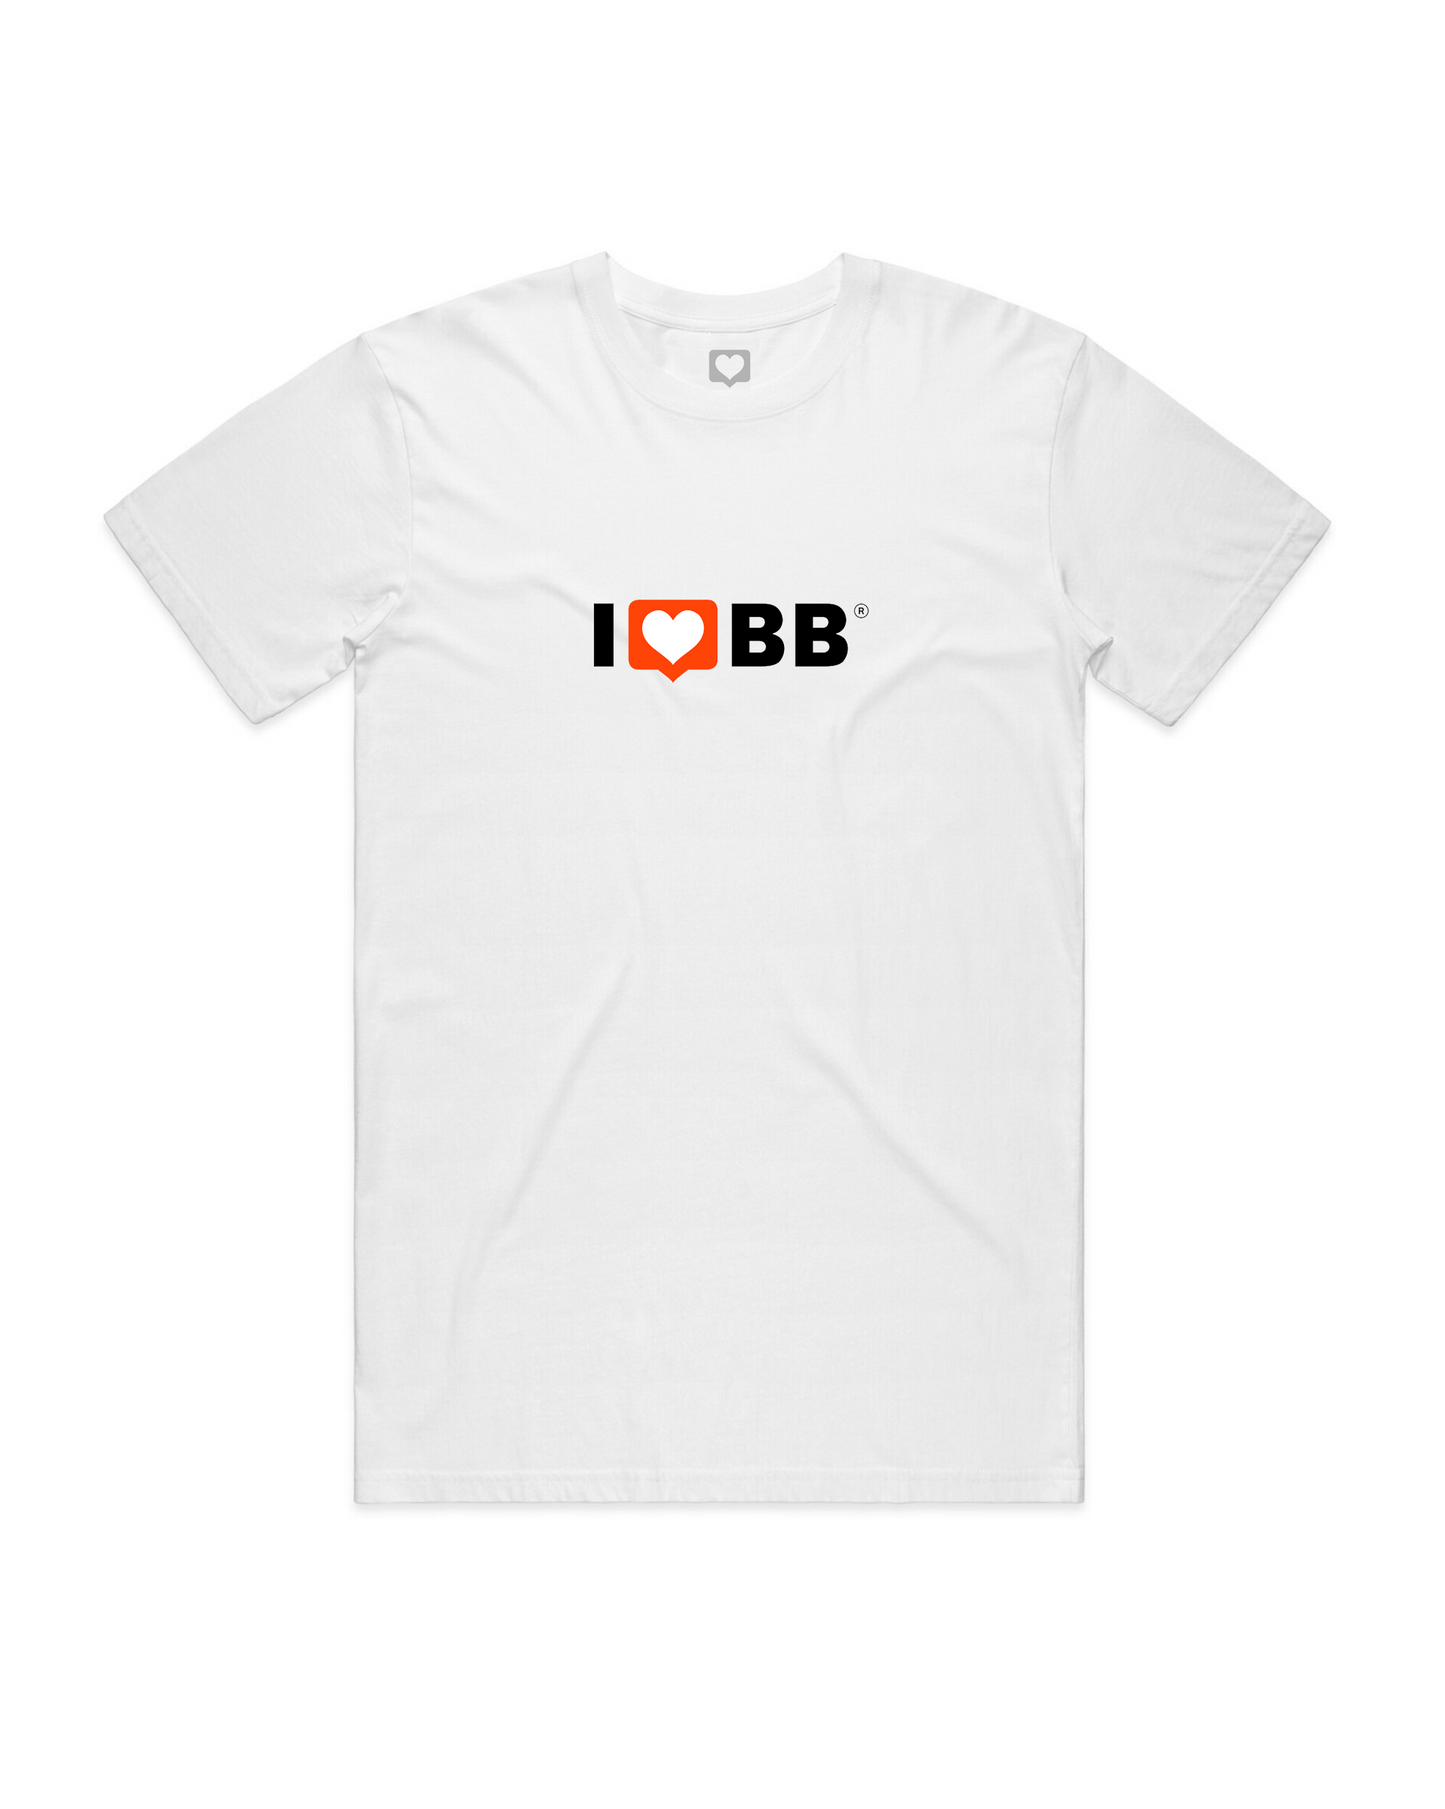 I Love BB T-Shirt